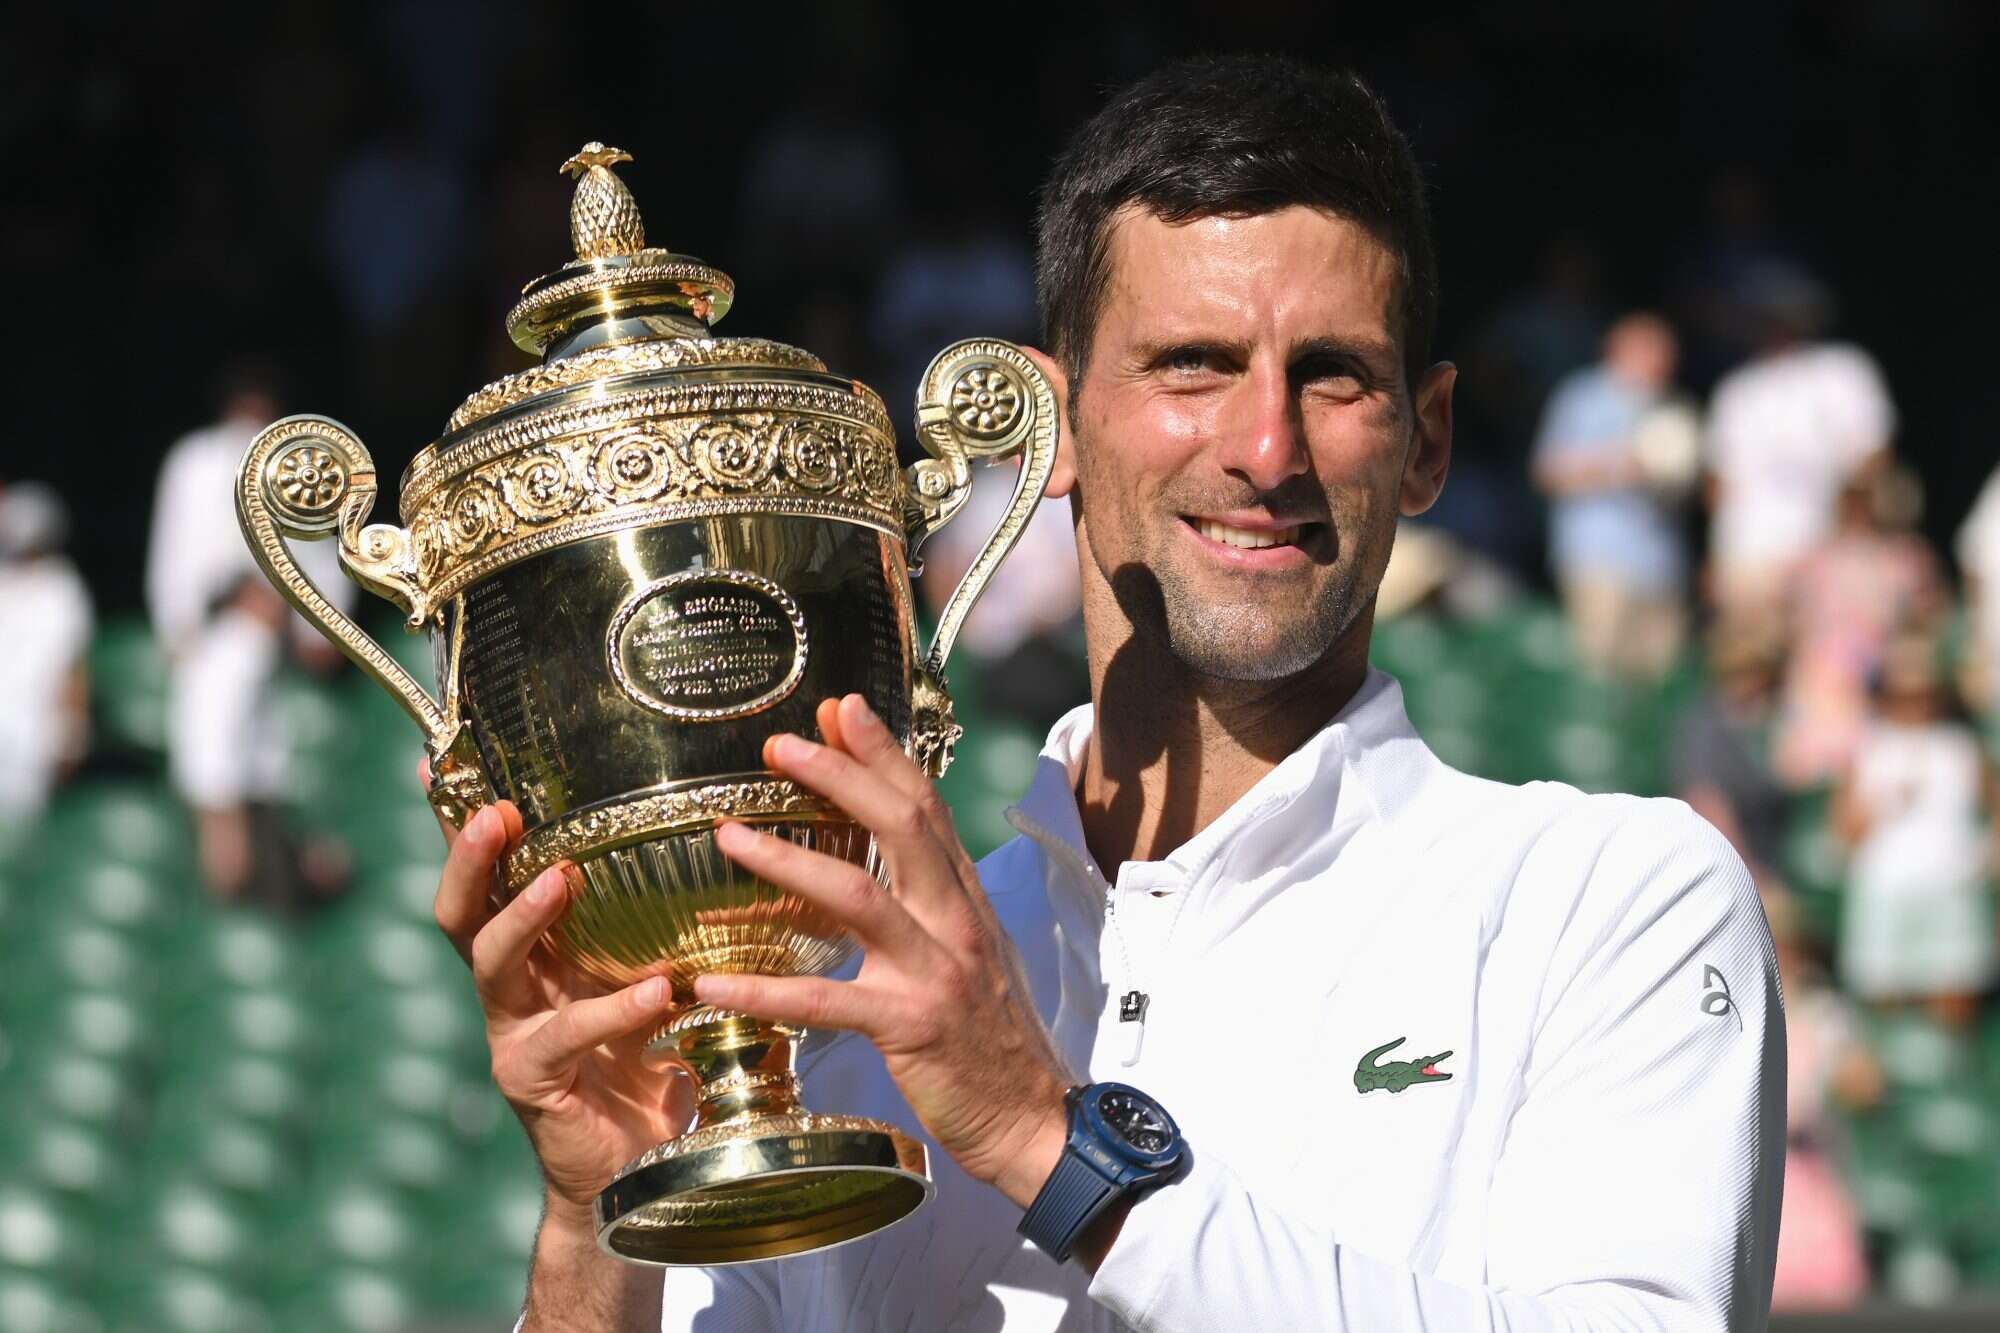 Novak Djokovic Says He'll Likely Skip U.S. Open Over Vaccine Policy